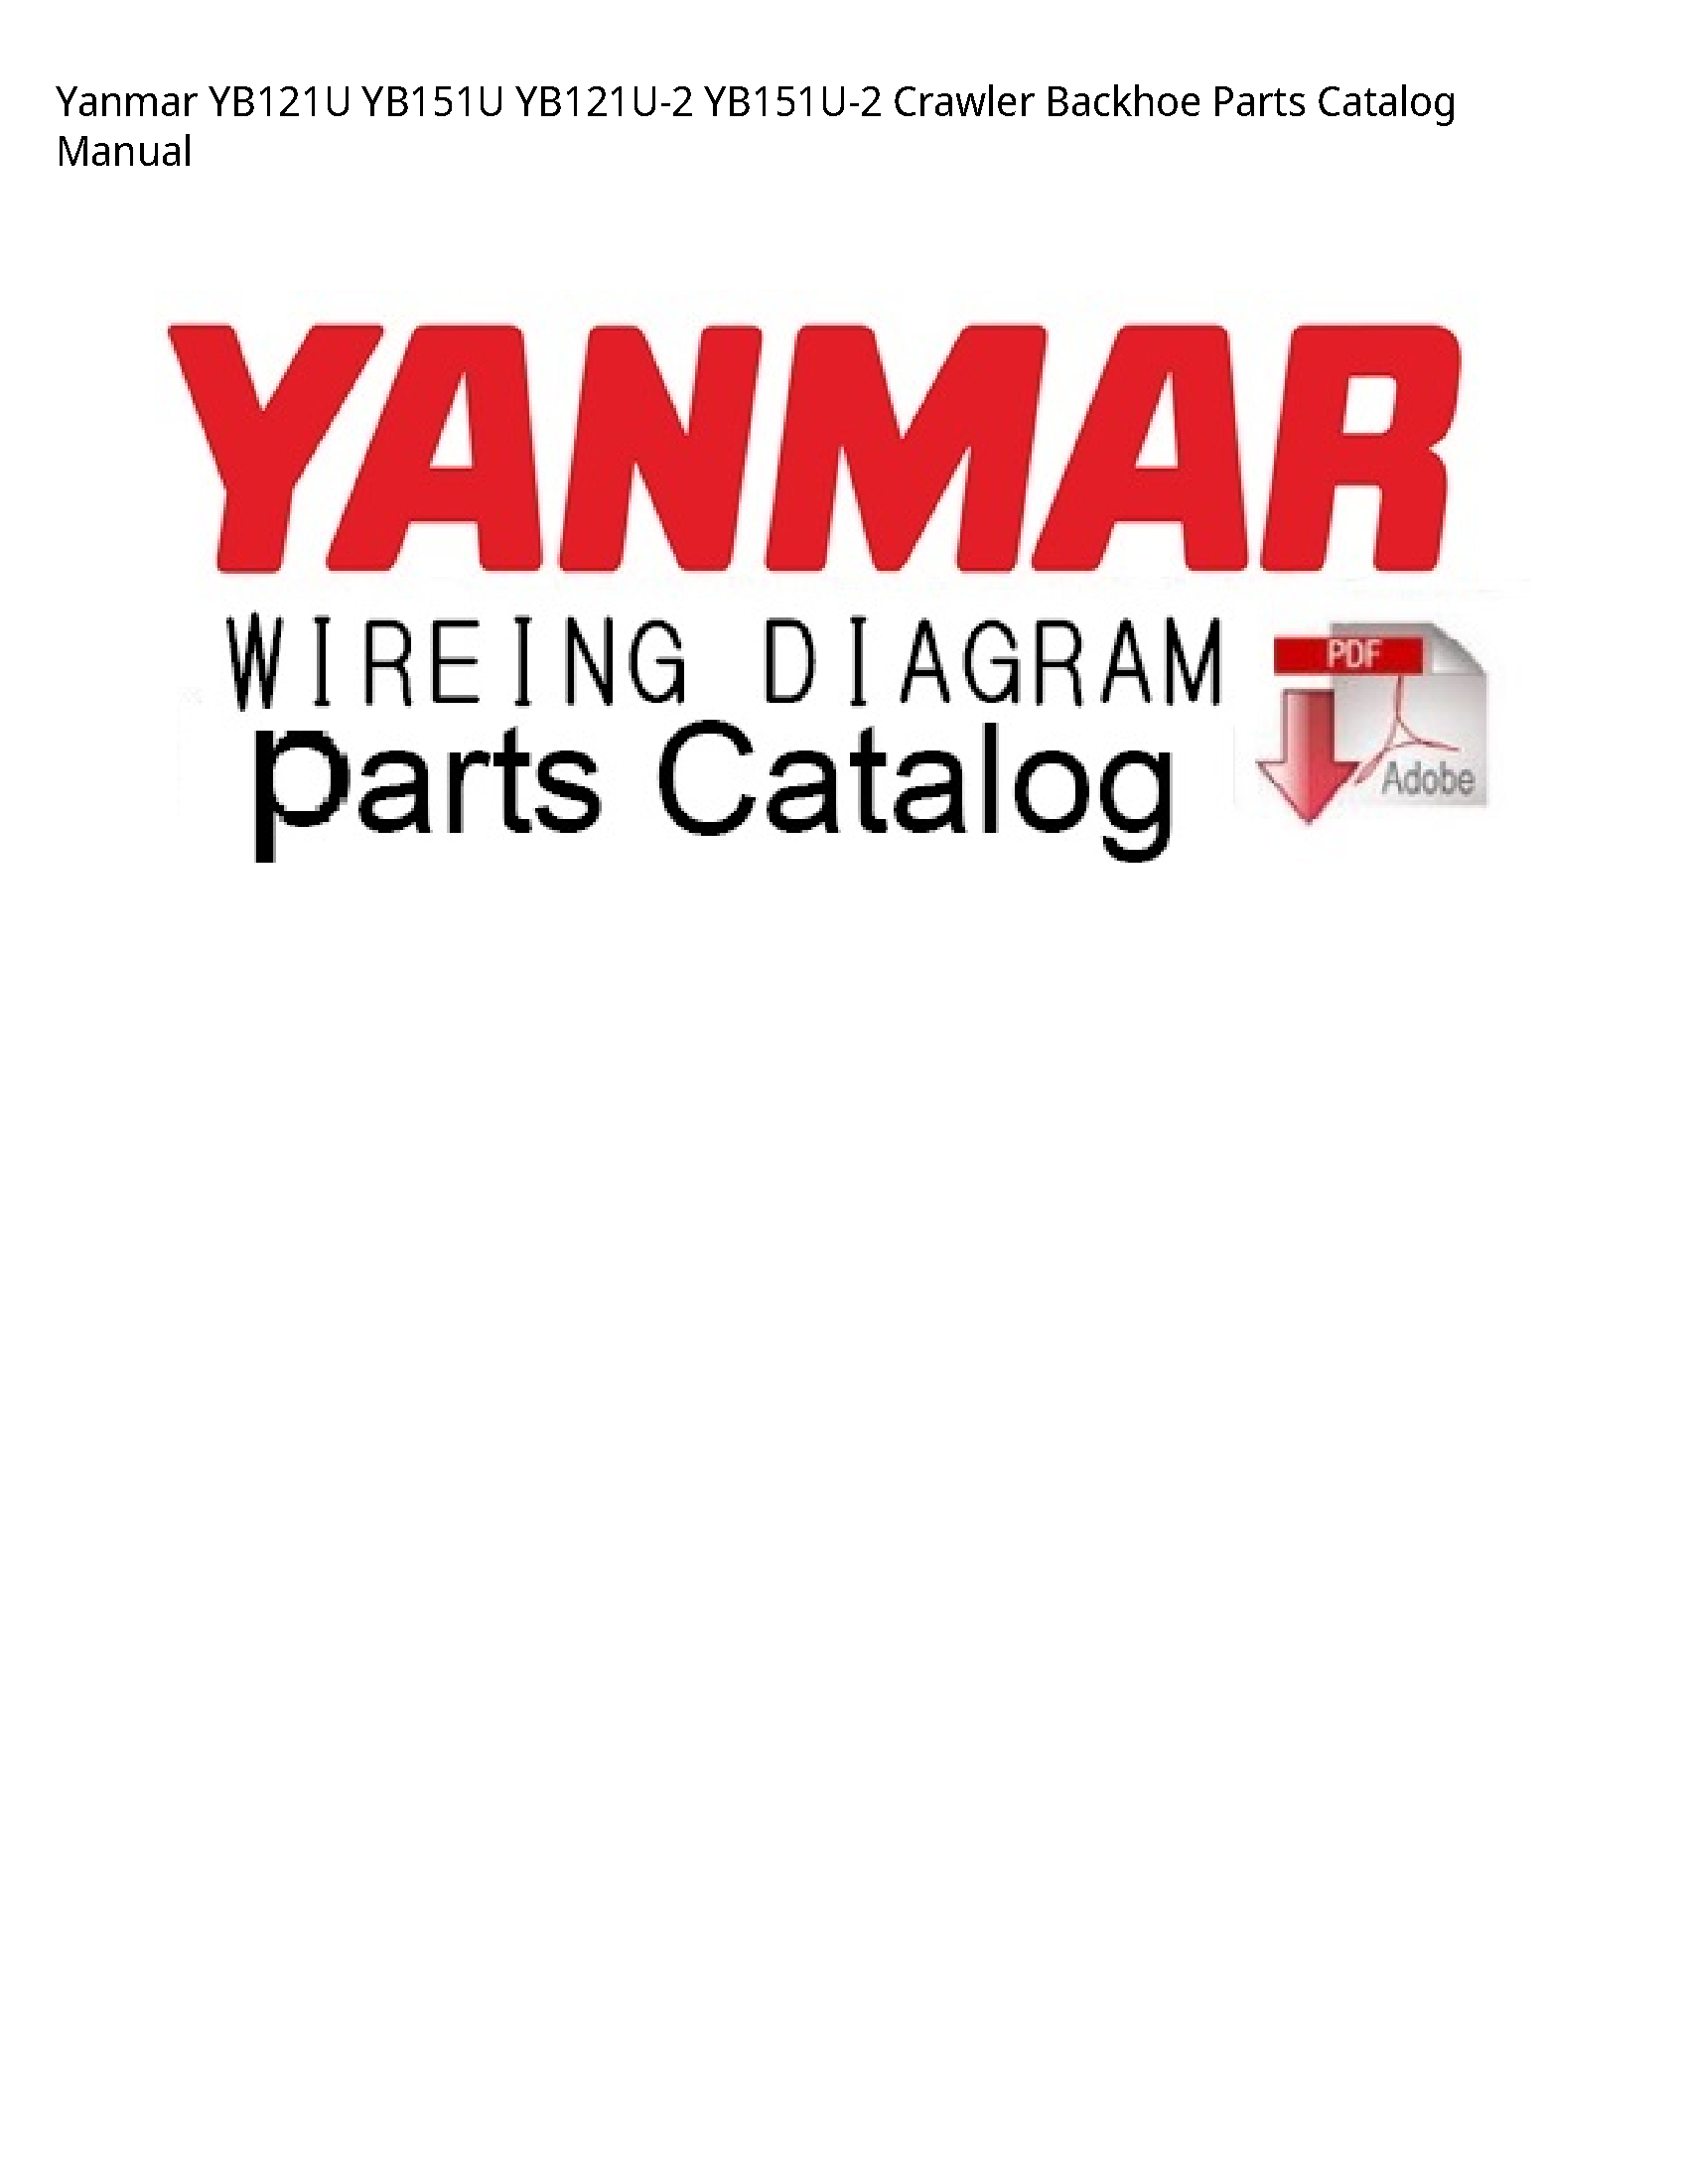 Yanmar YB121U Crawler Backhoe Parts Catalog manual